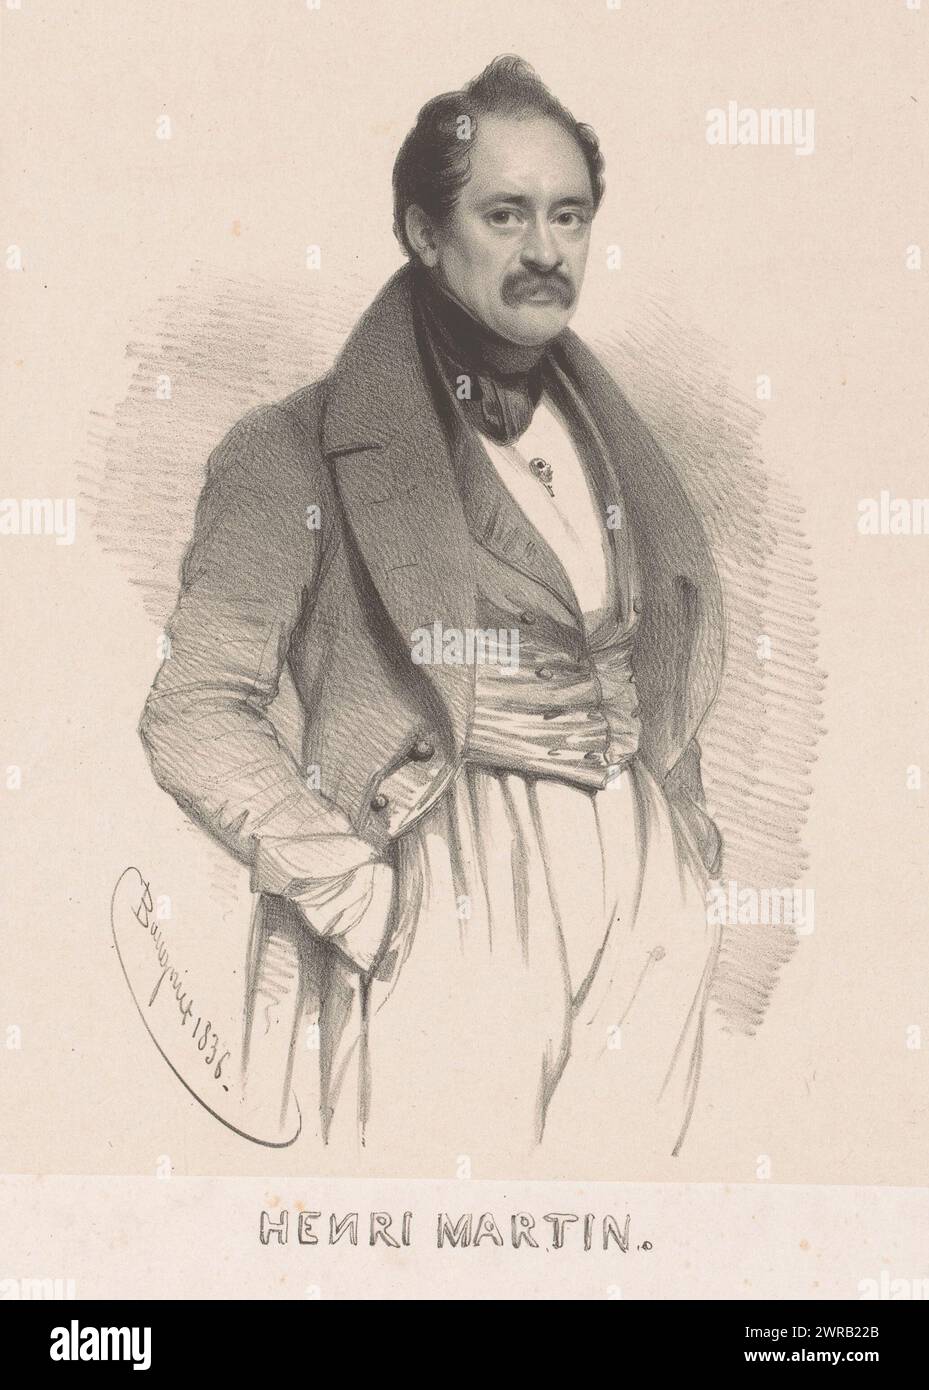 Portrait of Henri Martin, Henri Martin (title on object), print maker: Charles Baugniet, 1836, paper, height 362 mm × width 270 mm, print Stock Photo